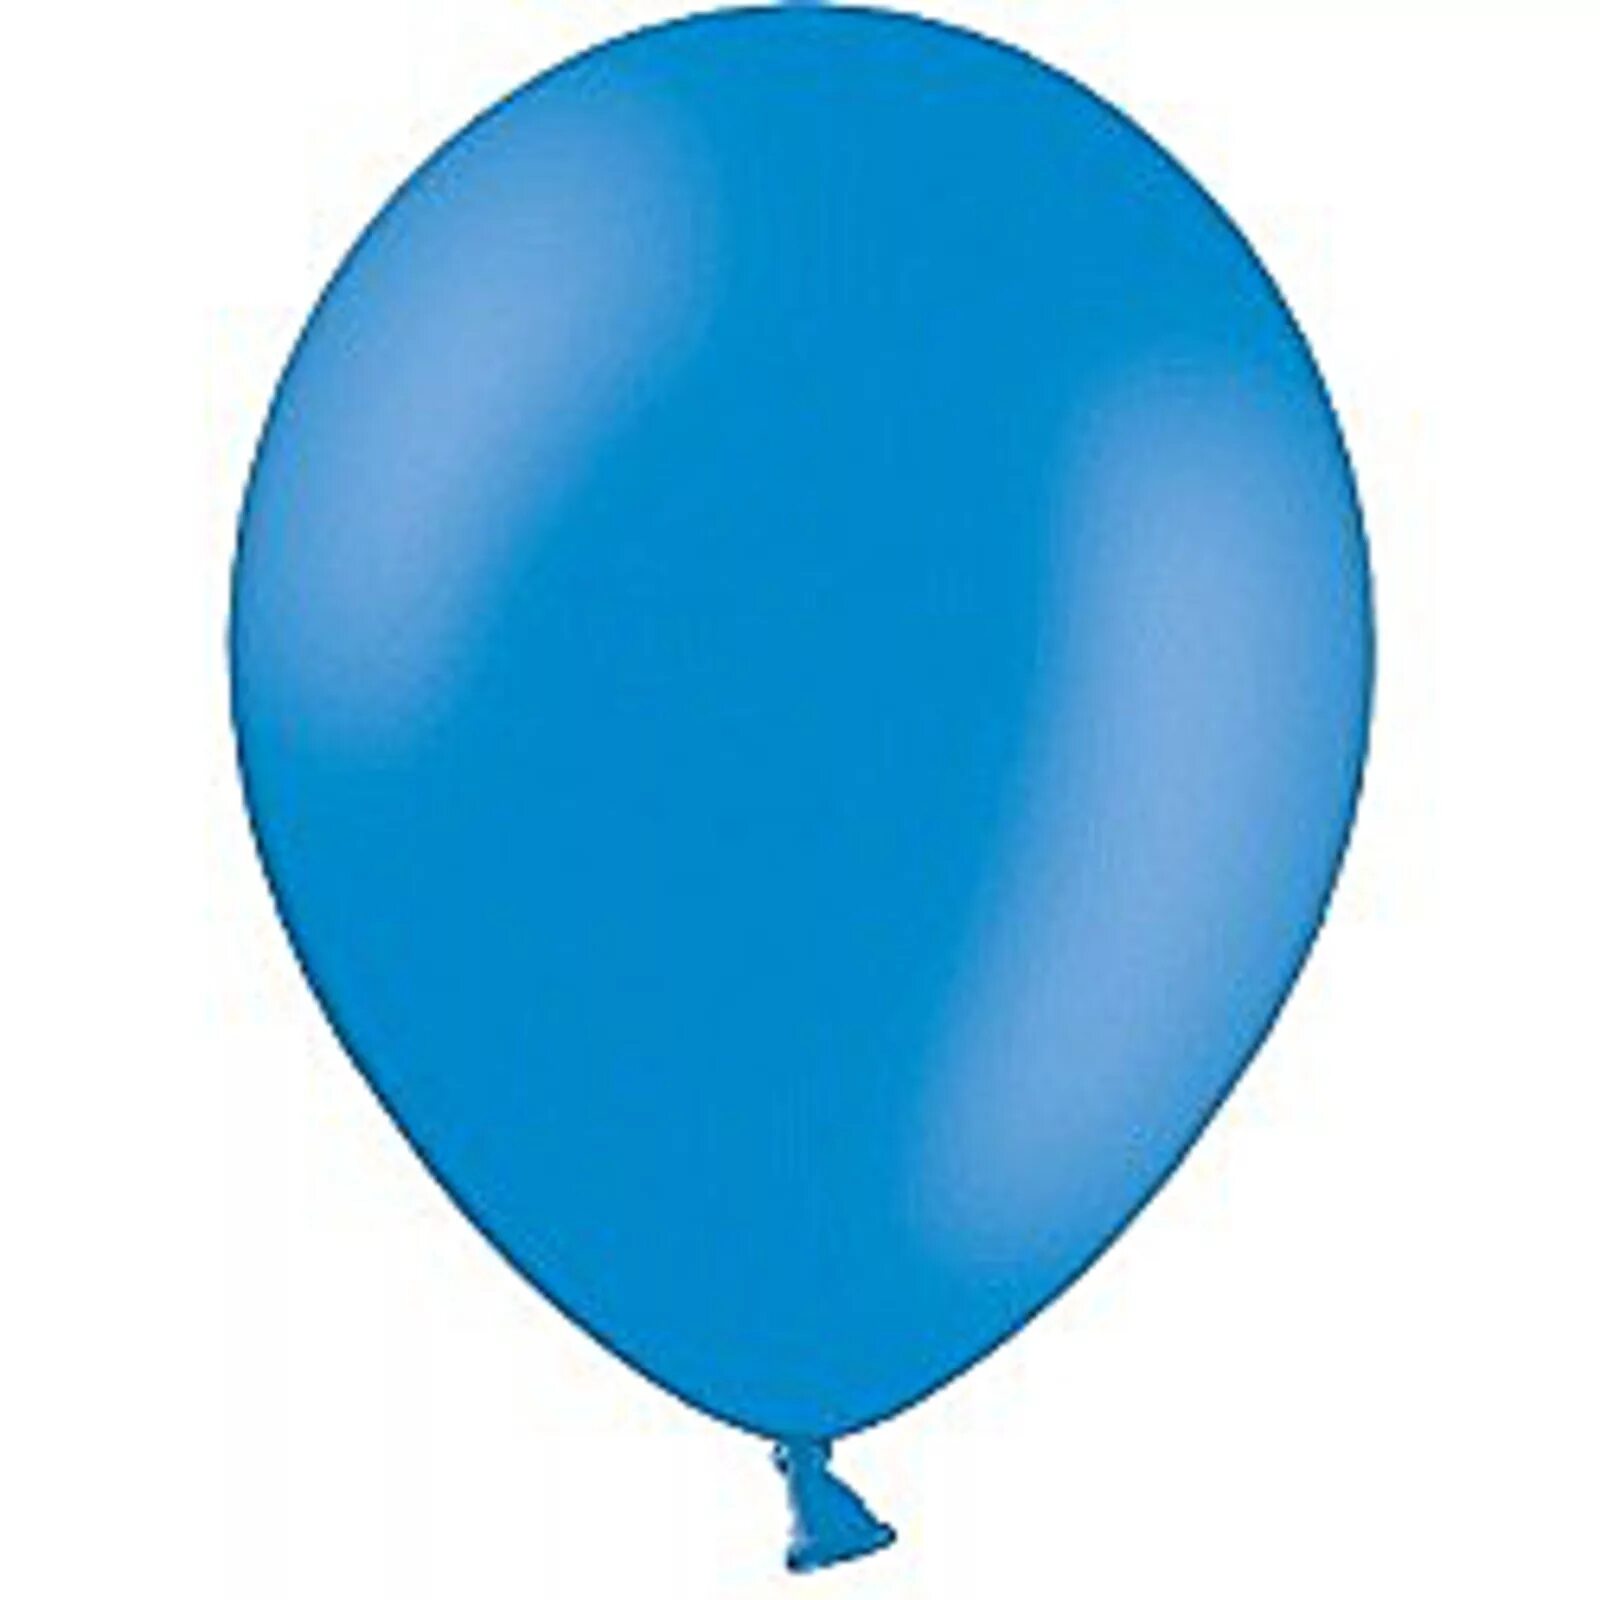 1102-1785 Пастель Orange шар Белбал. 1101-0537 Шар Белбал. Воздушный шарик. Синий воздушный шарик.